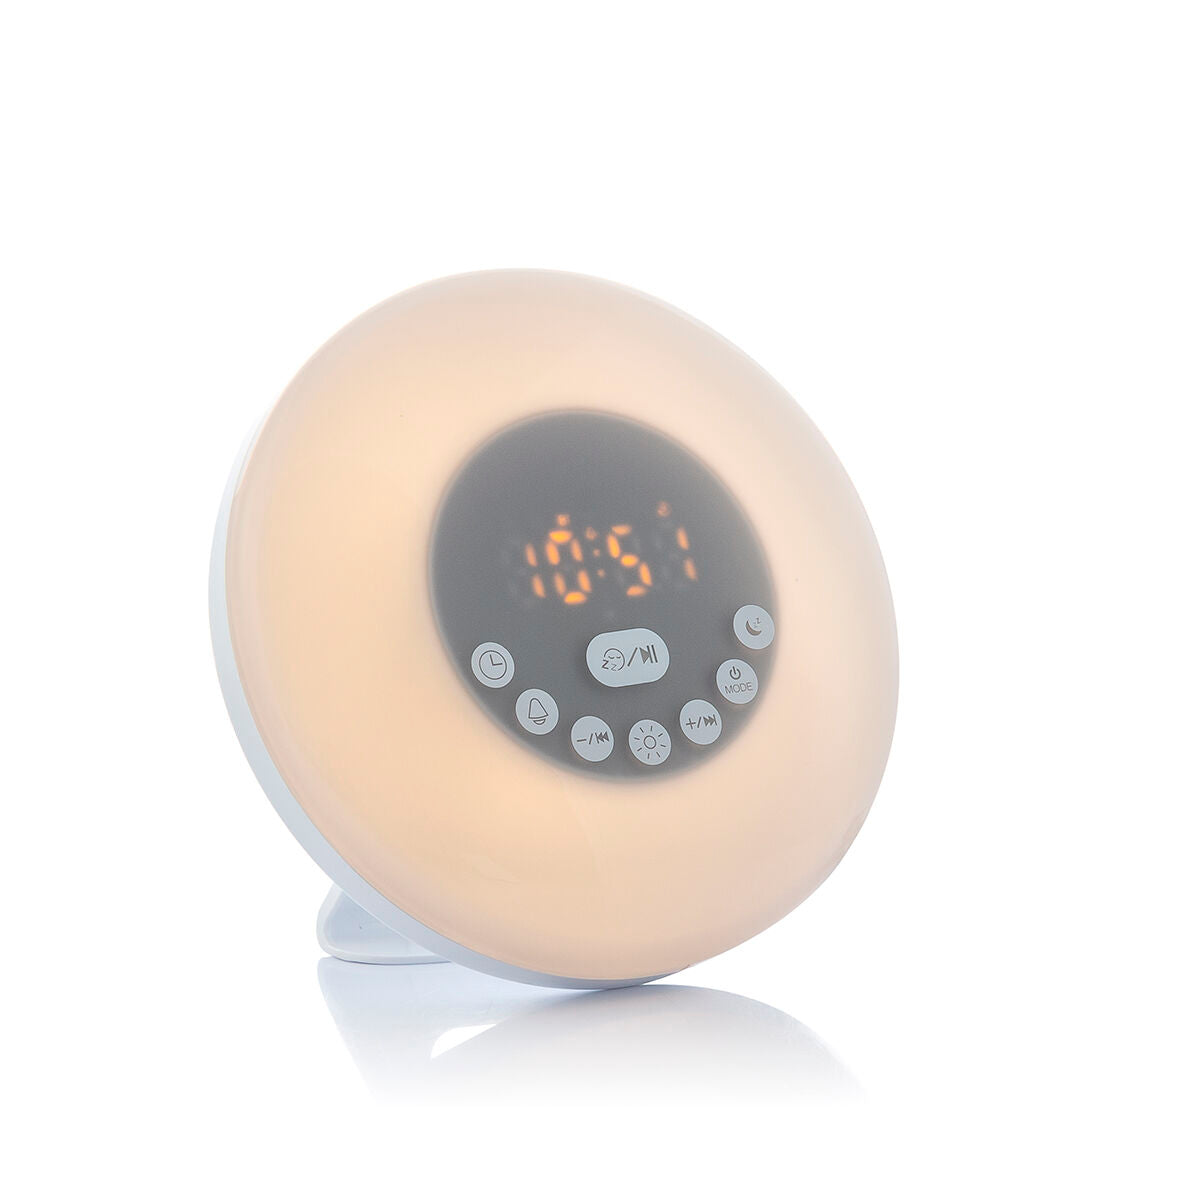 Rechargeable Sunrise Alarm Clock with Speaker Slockar InnovaGoods